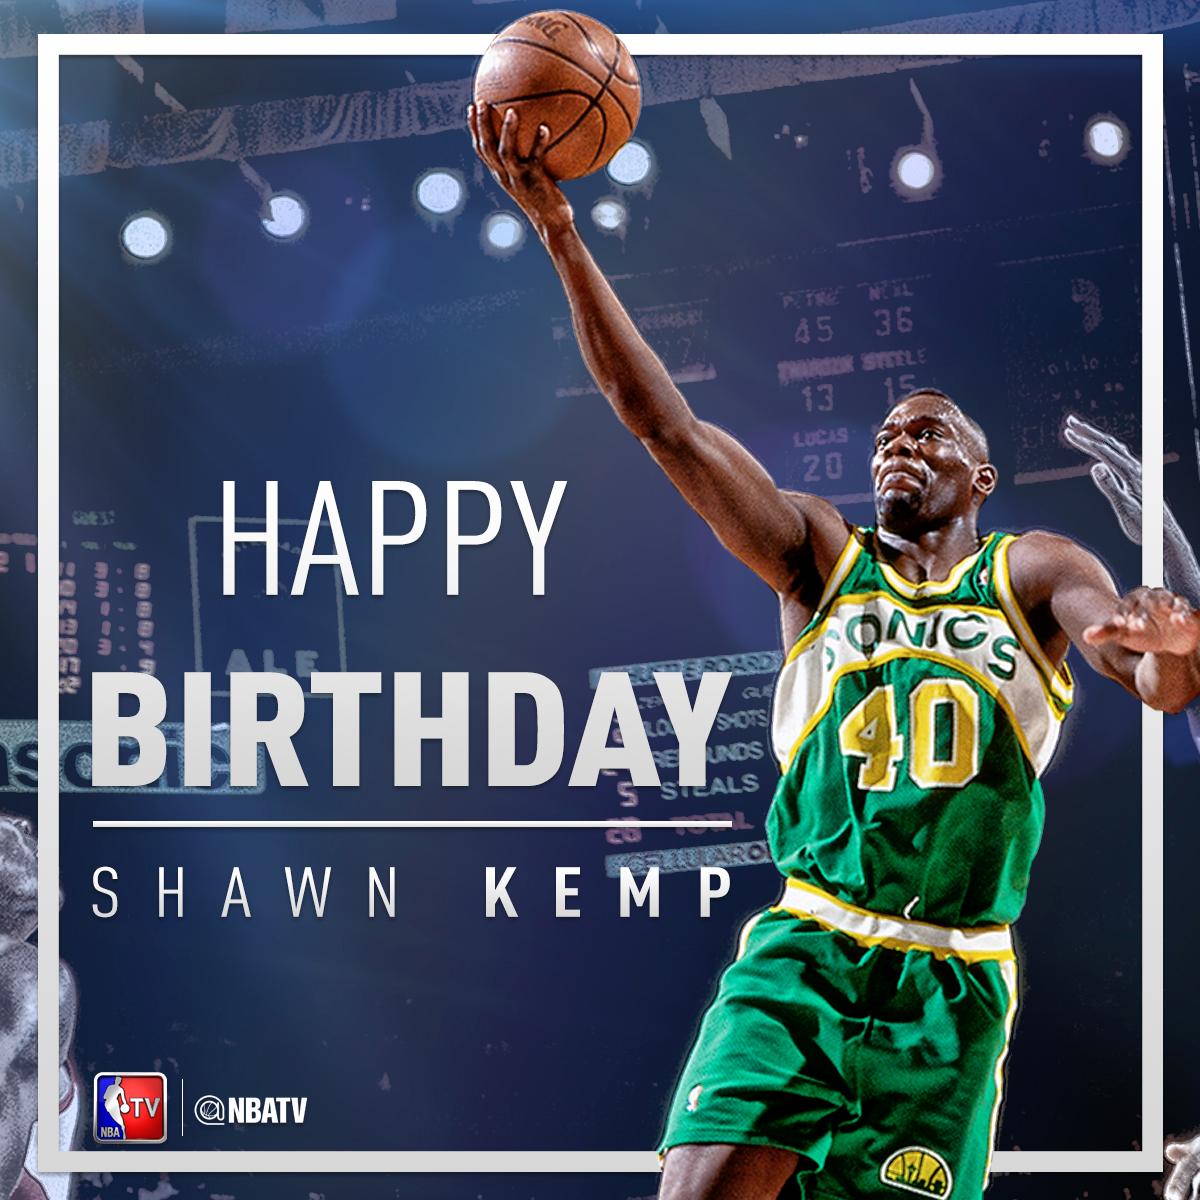 Happy Birthday to Shawn Kemp! 